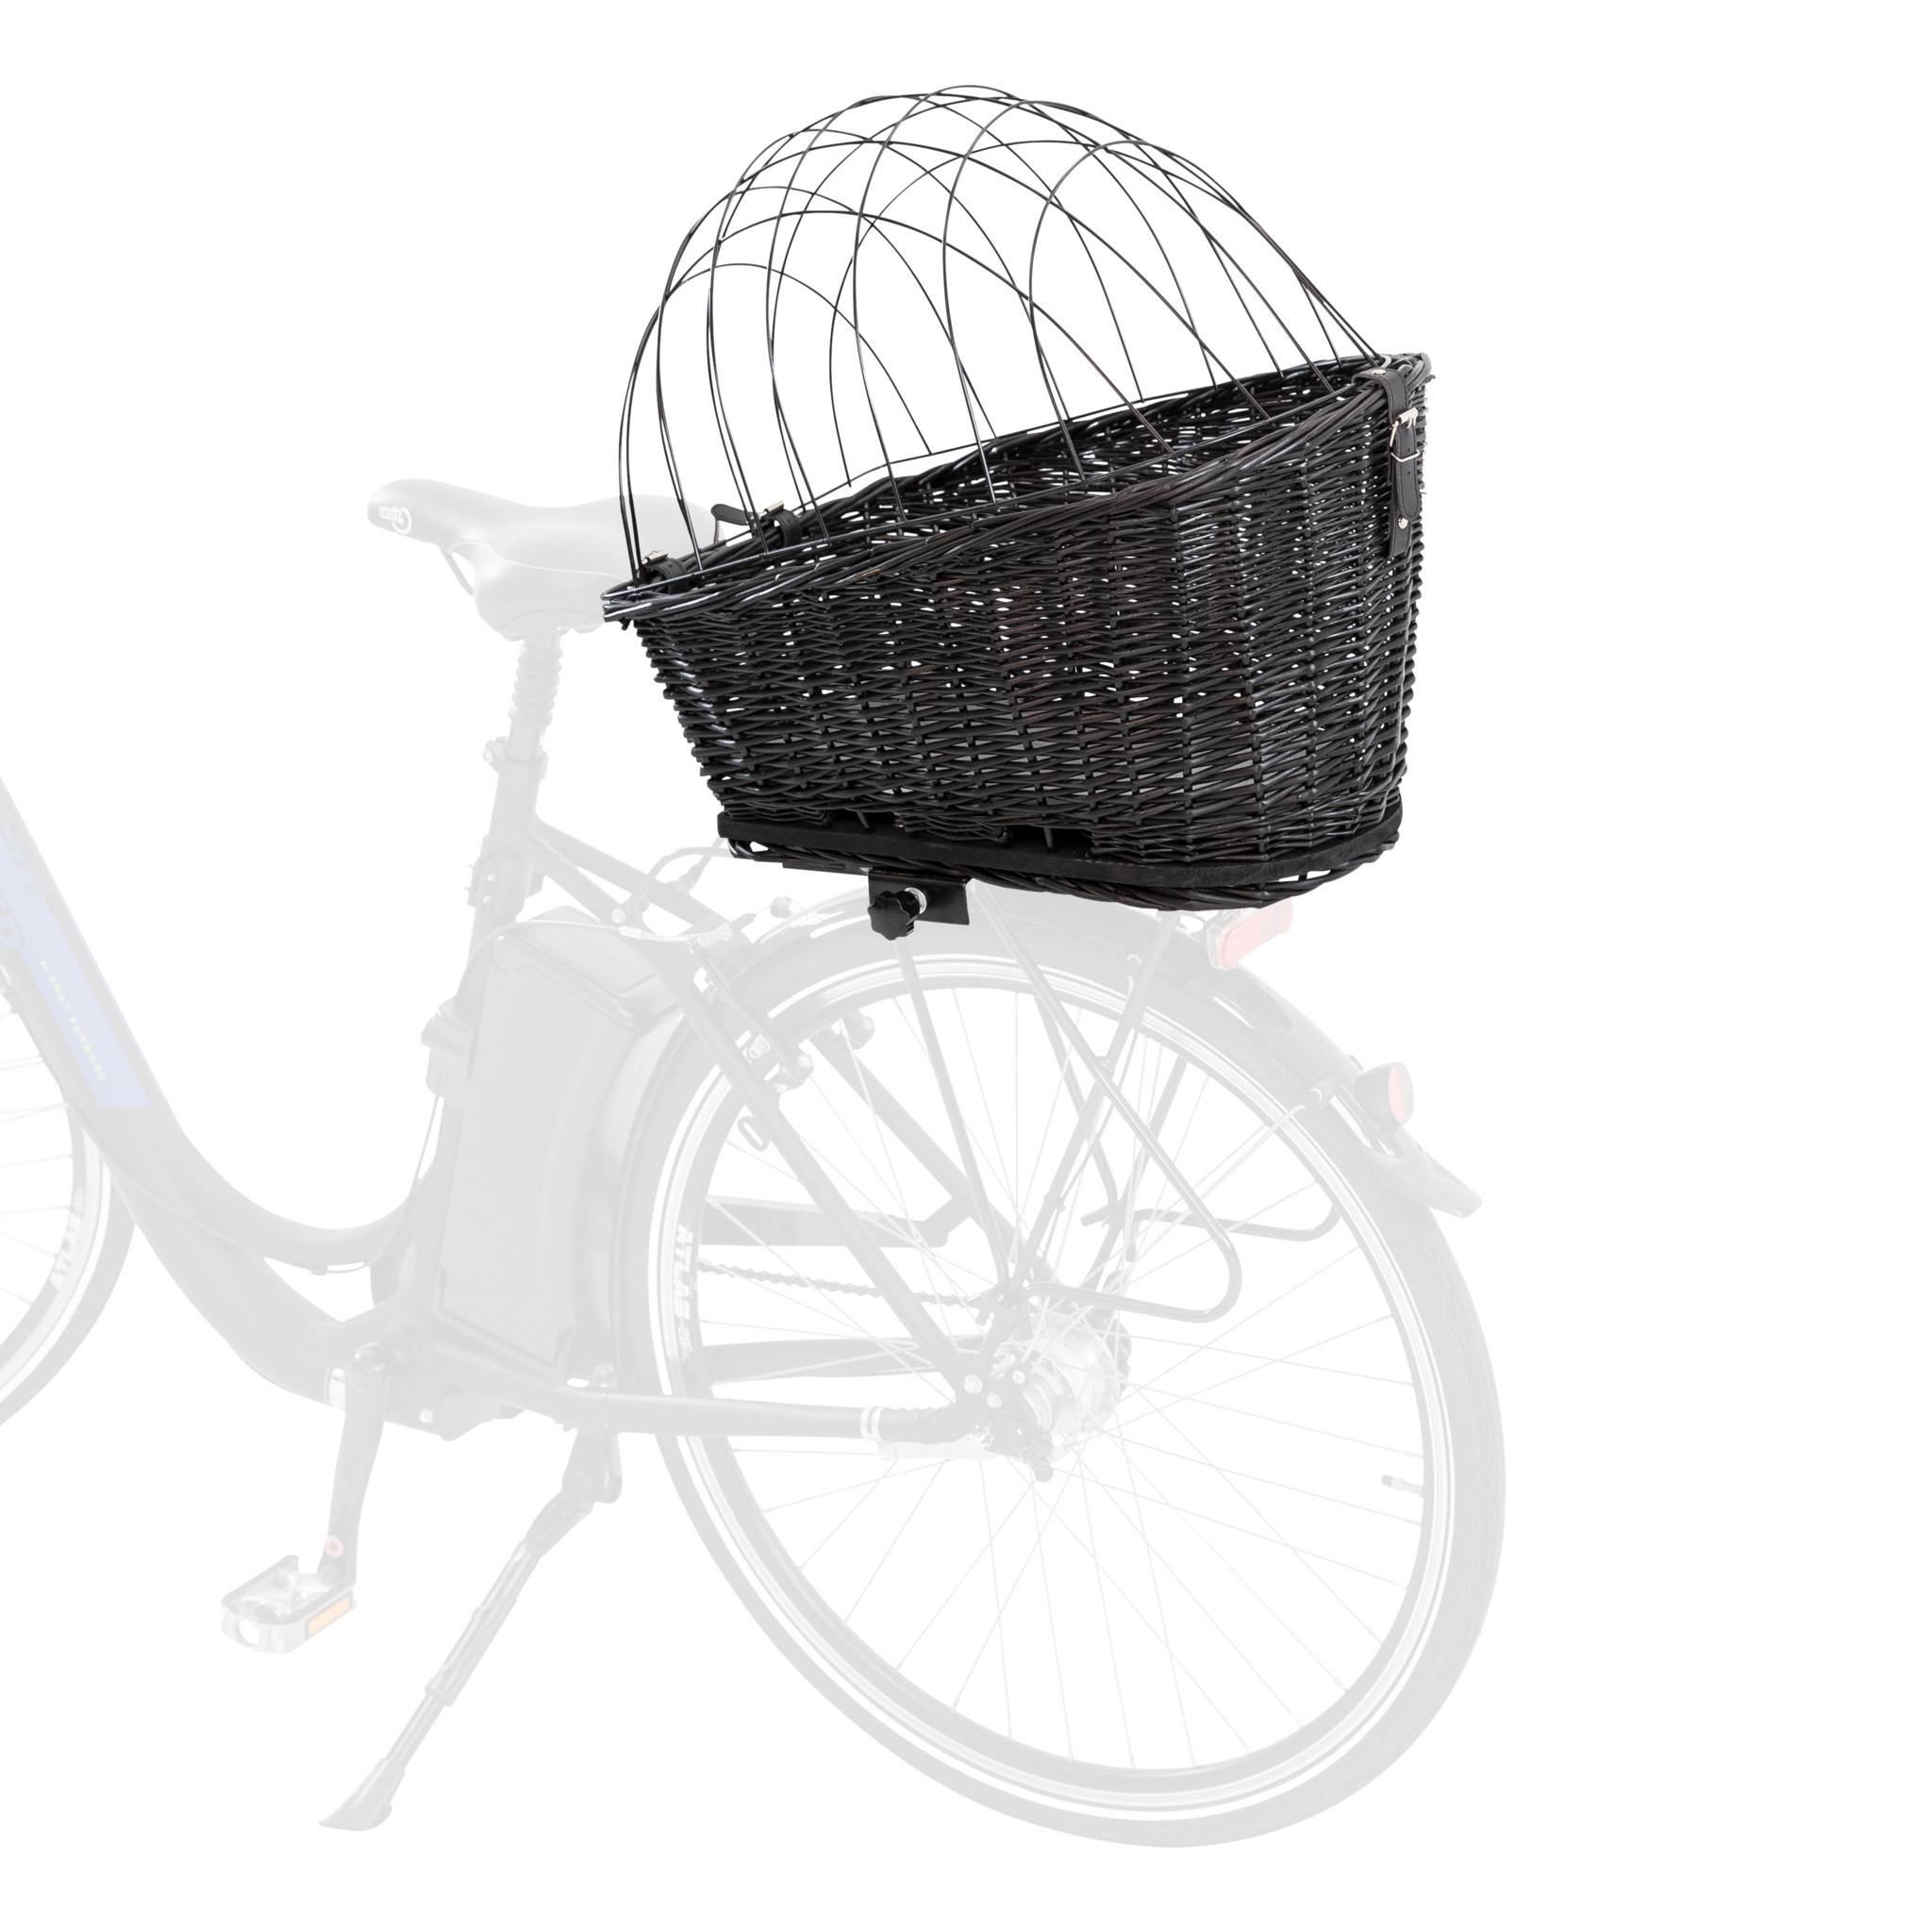 Bicycle Basket for Bike Racks, Willow